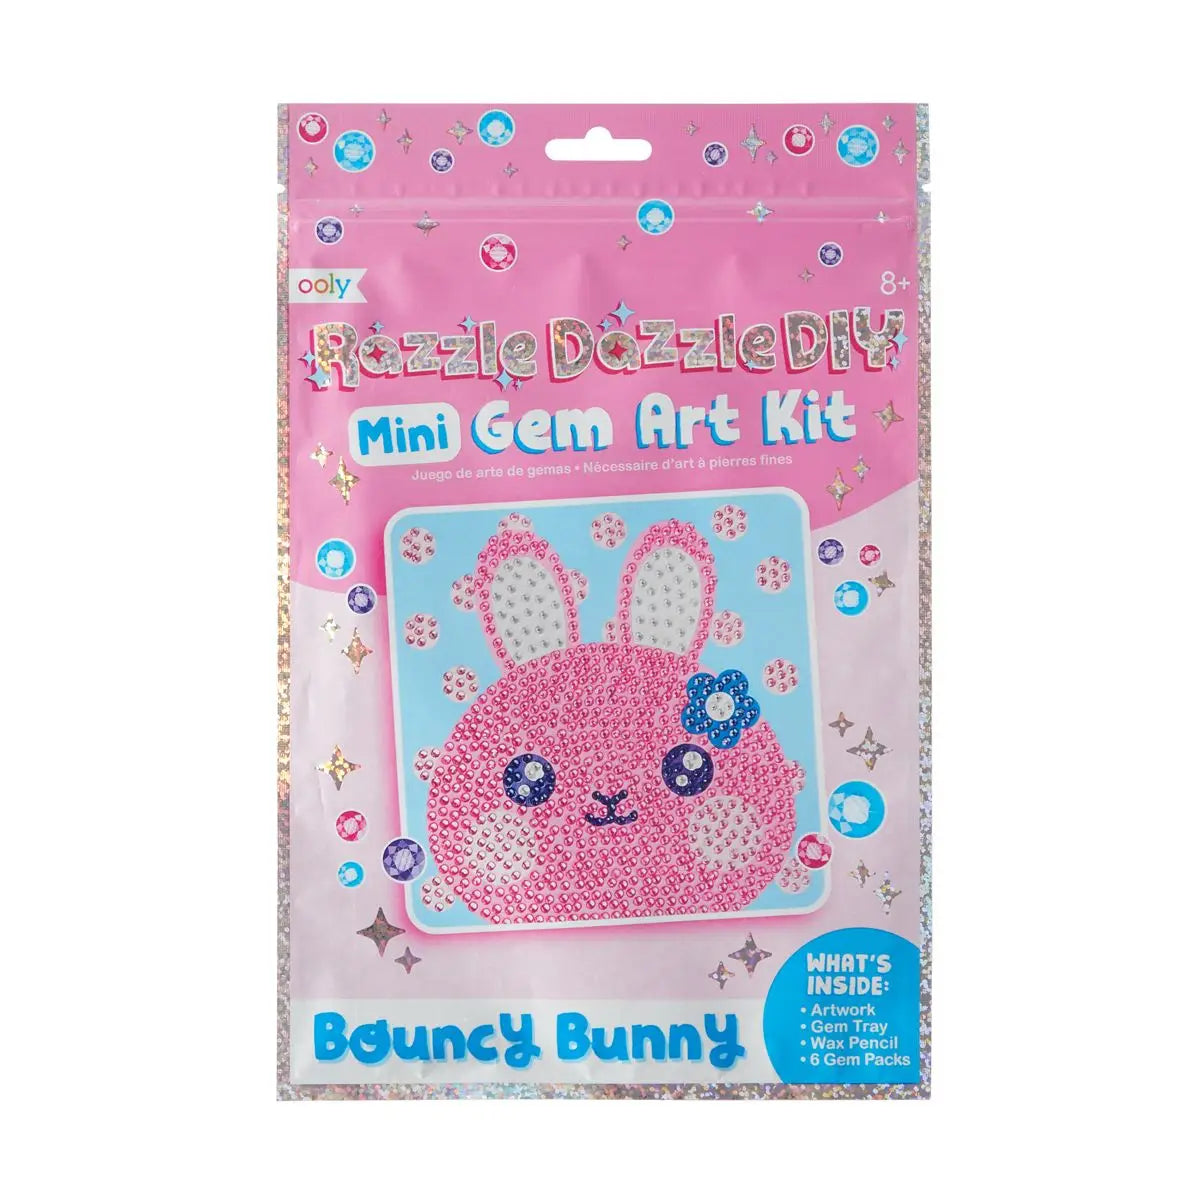 Razzle Dazzle D.I.Y. Mini Gem Art Kit- Bouncy Bunny